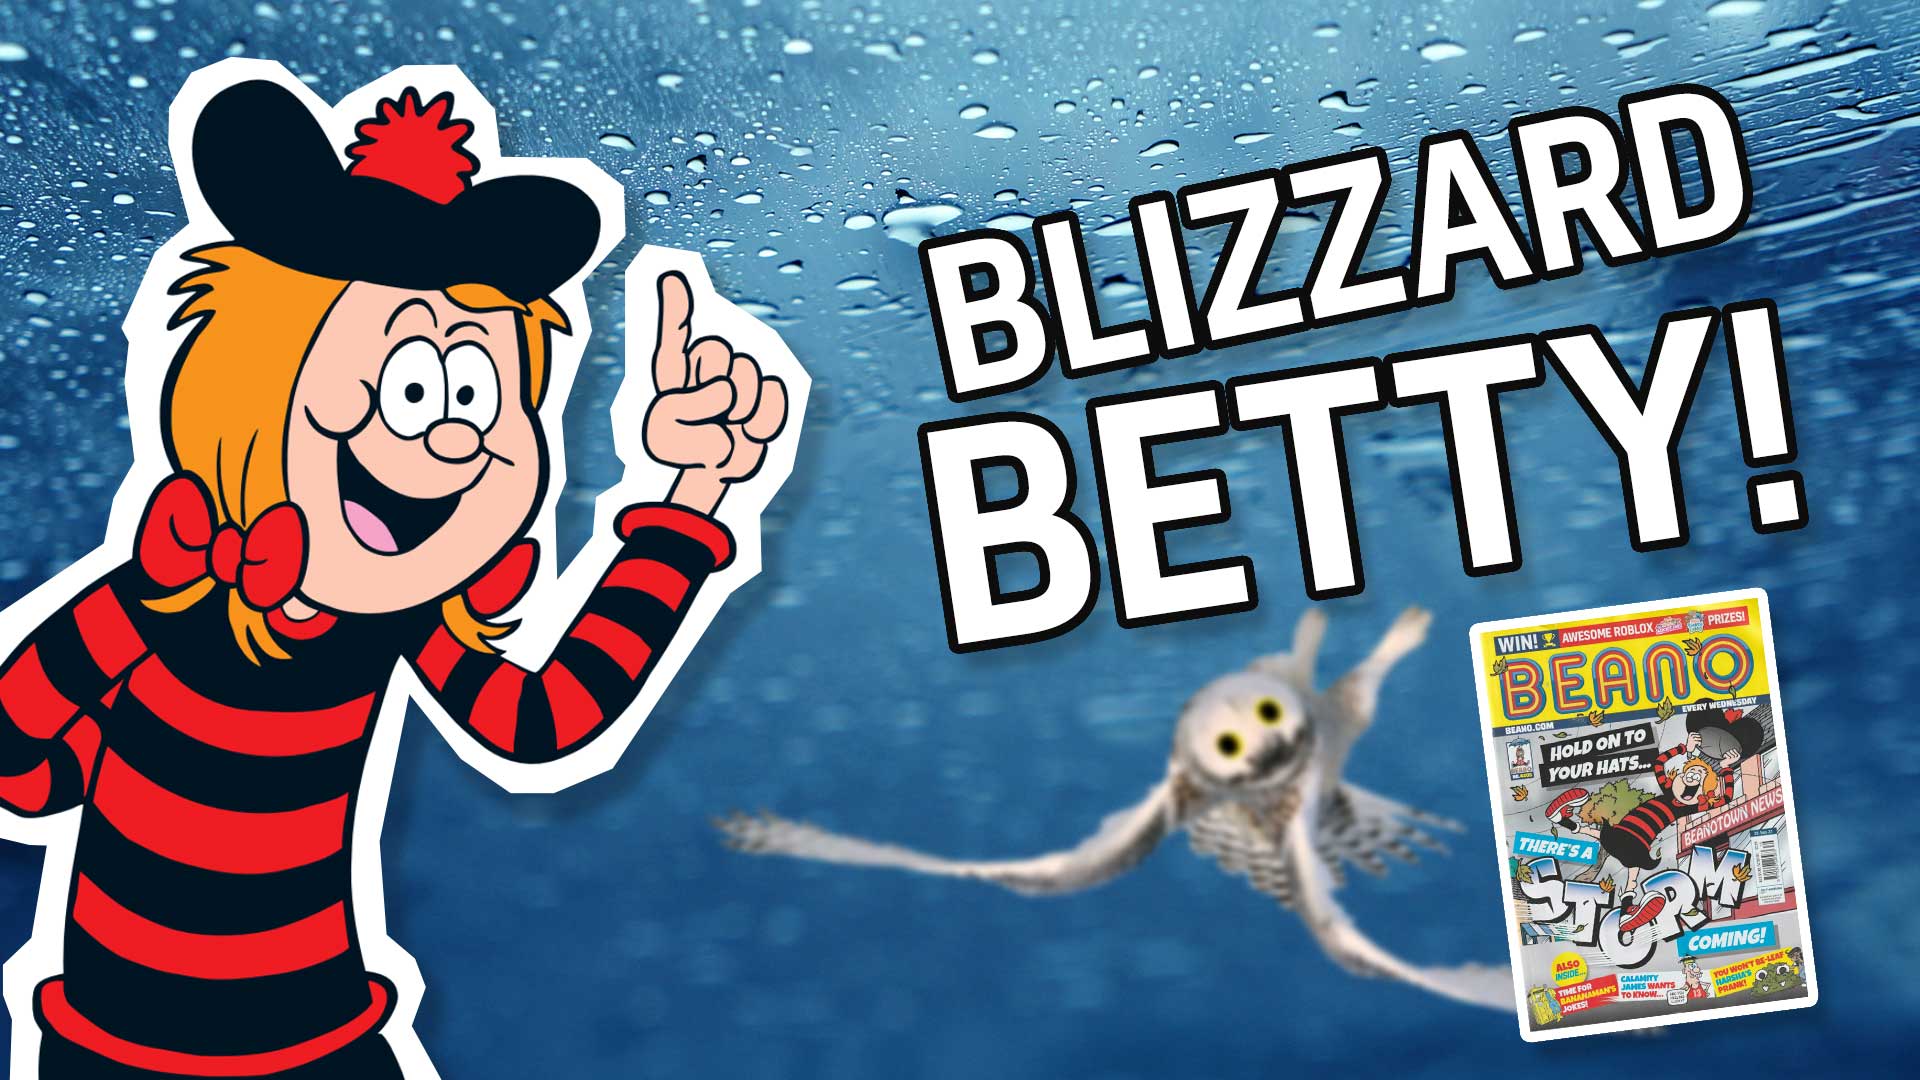 Result: Blizzard Betty